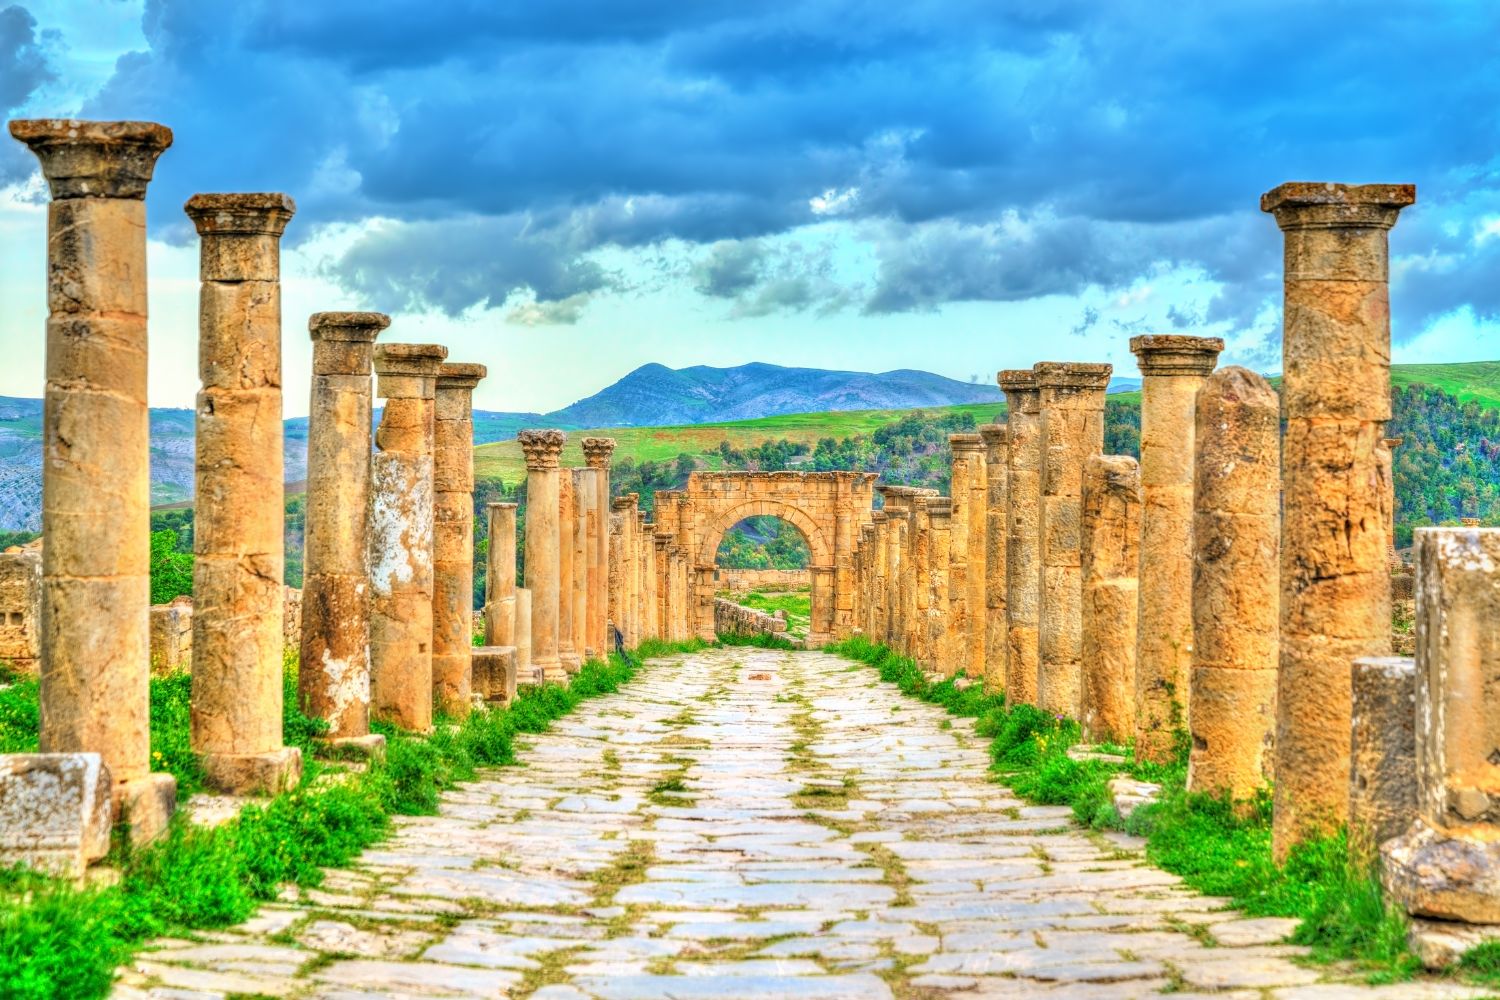 Tipasa Roman Ruins in Algeria Roman Ruins of Djemila